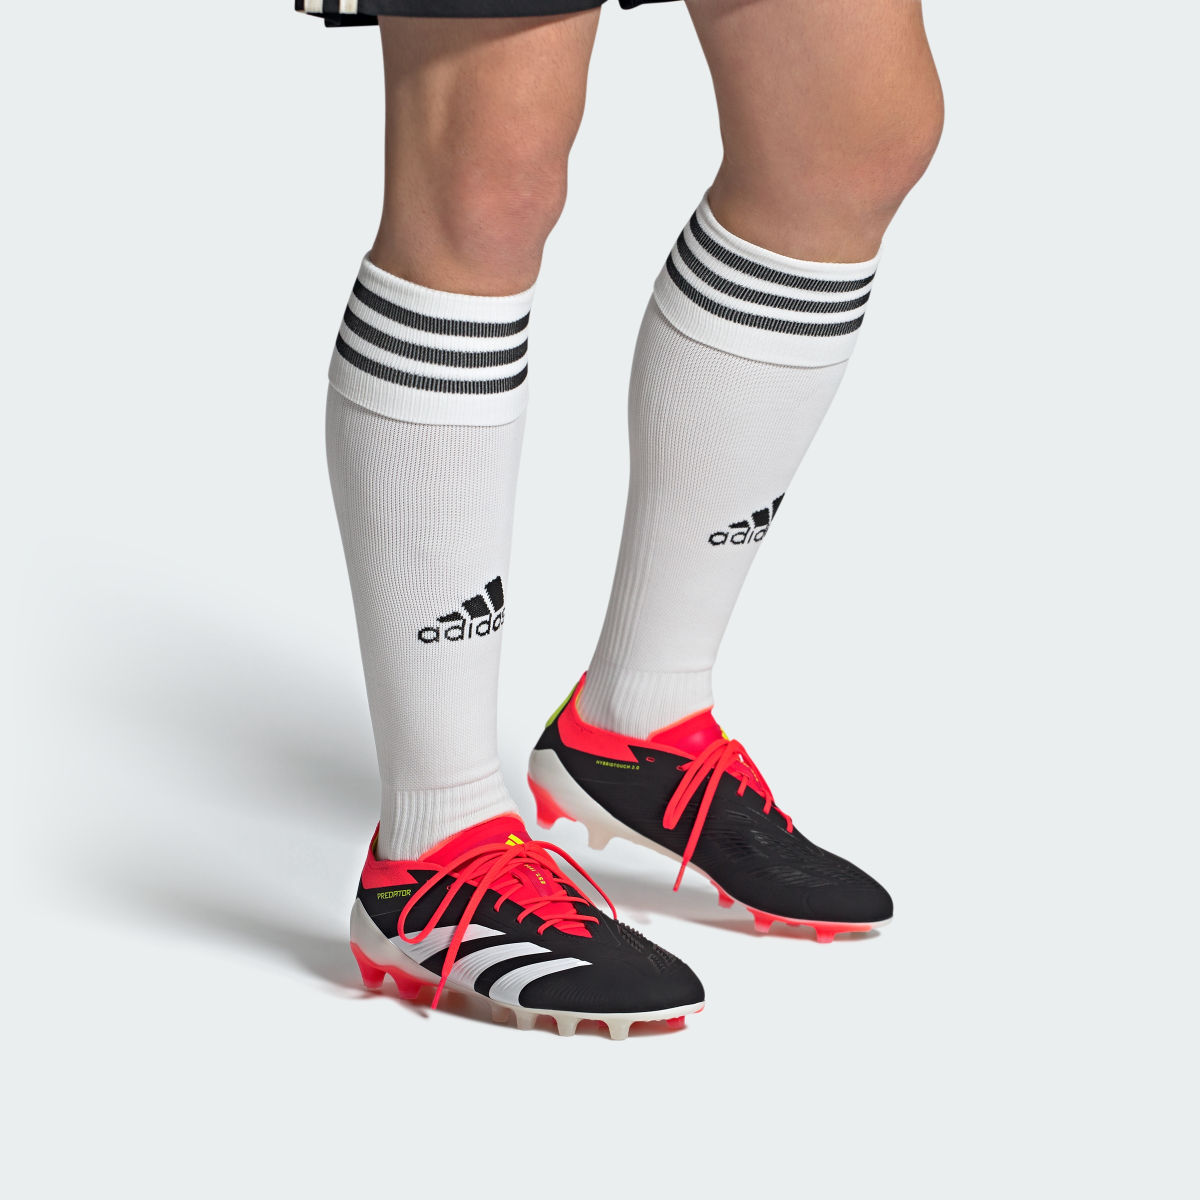 Adidas Predator Elite Artificial Grass Football Boots. 5